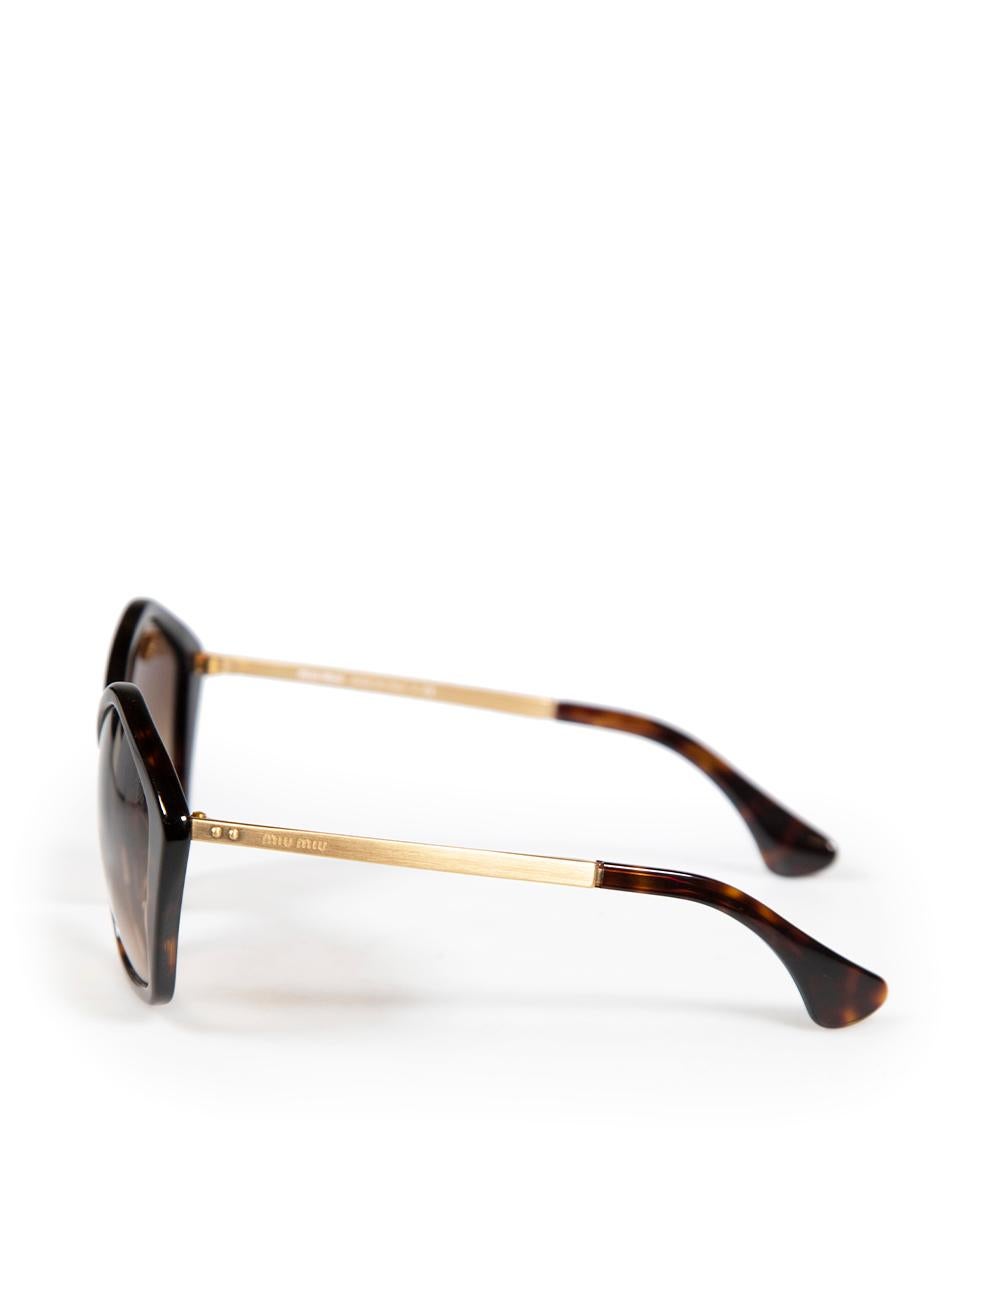 Women's Miu Miu Brown Tortoiseshell Pentagon Frame Tinted Sunglasses For Sale